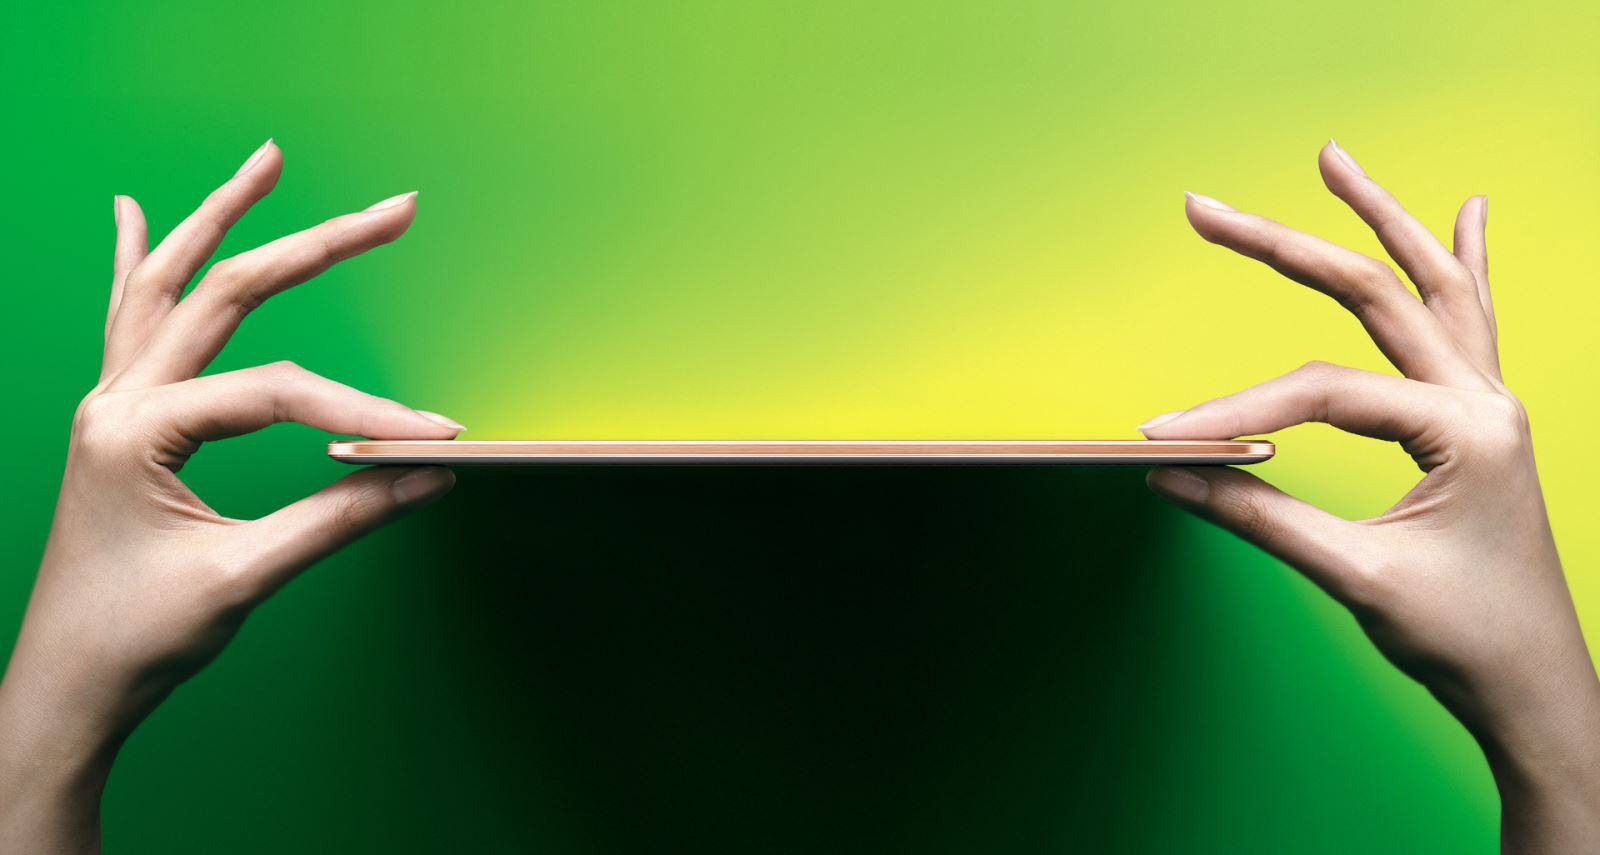 Samsung Galaxy Tab S 10.5 inch